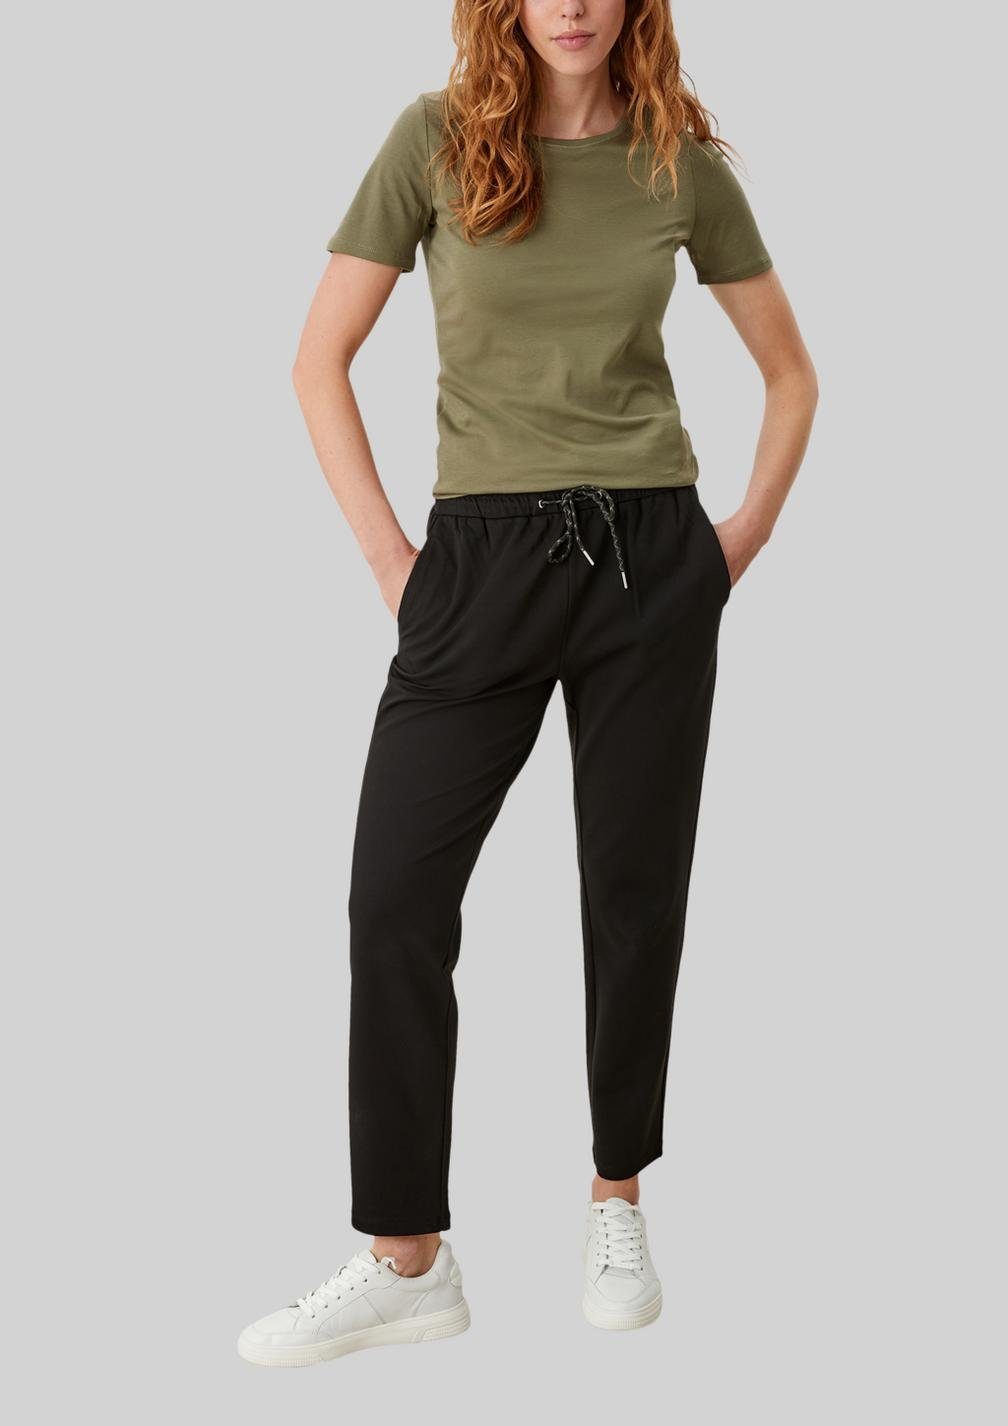 s.Oliver T-Shirt 2 Single-Jersey Khaki softer Basic Stück Fit, Qualität, aus Slim